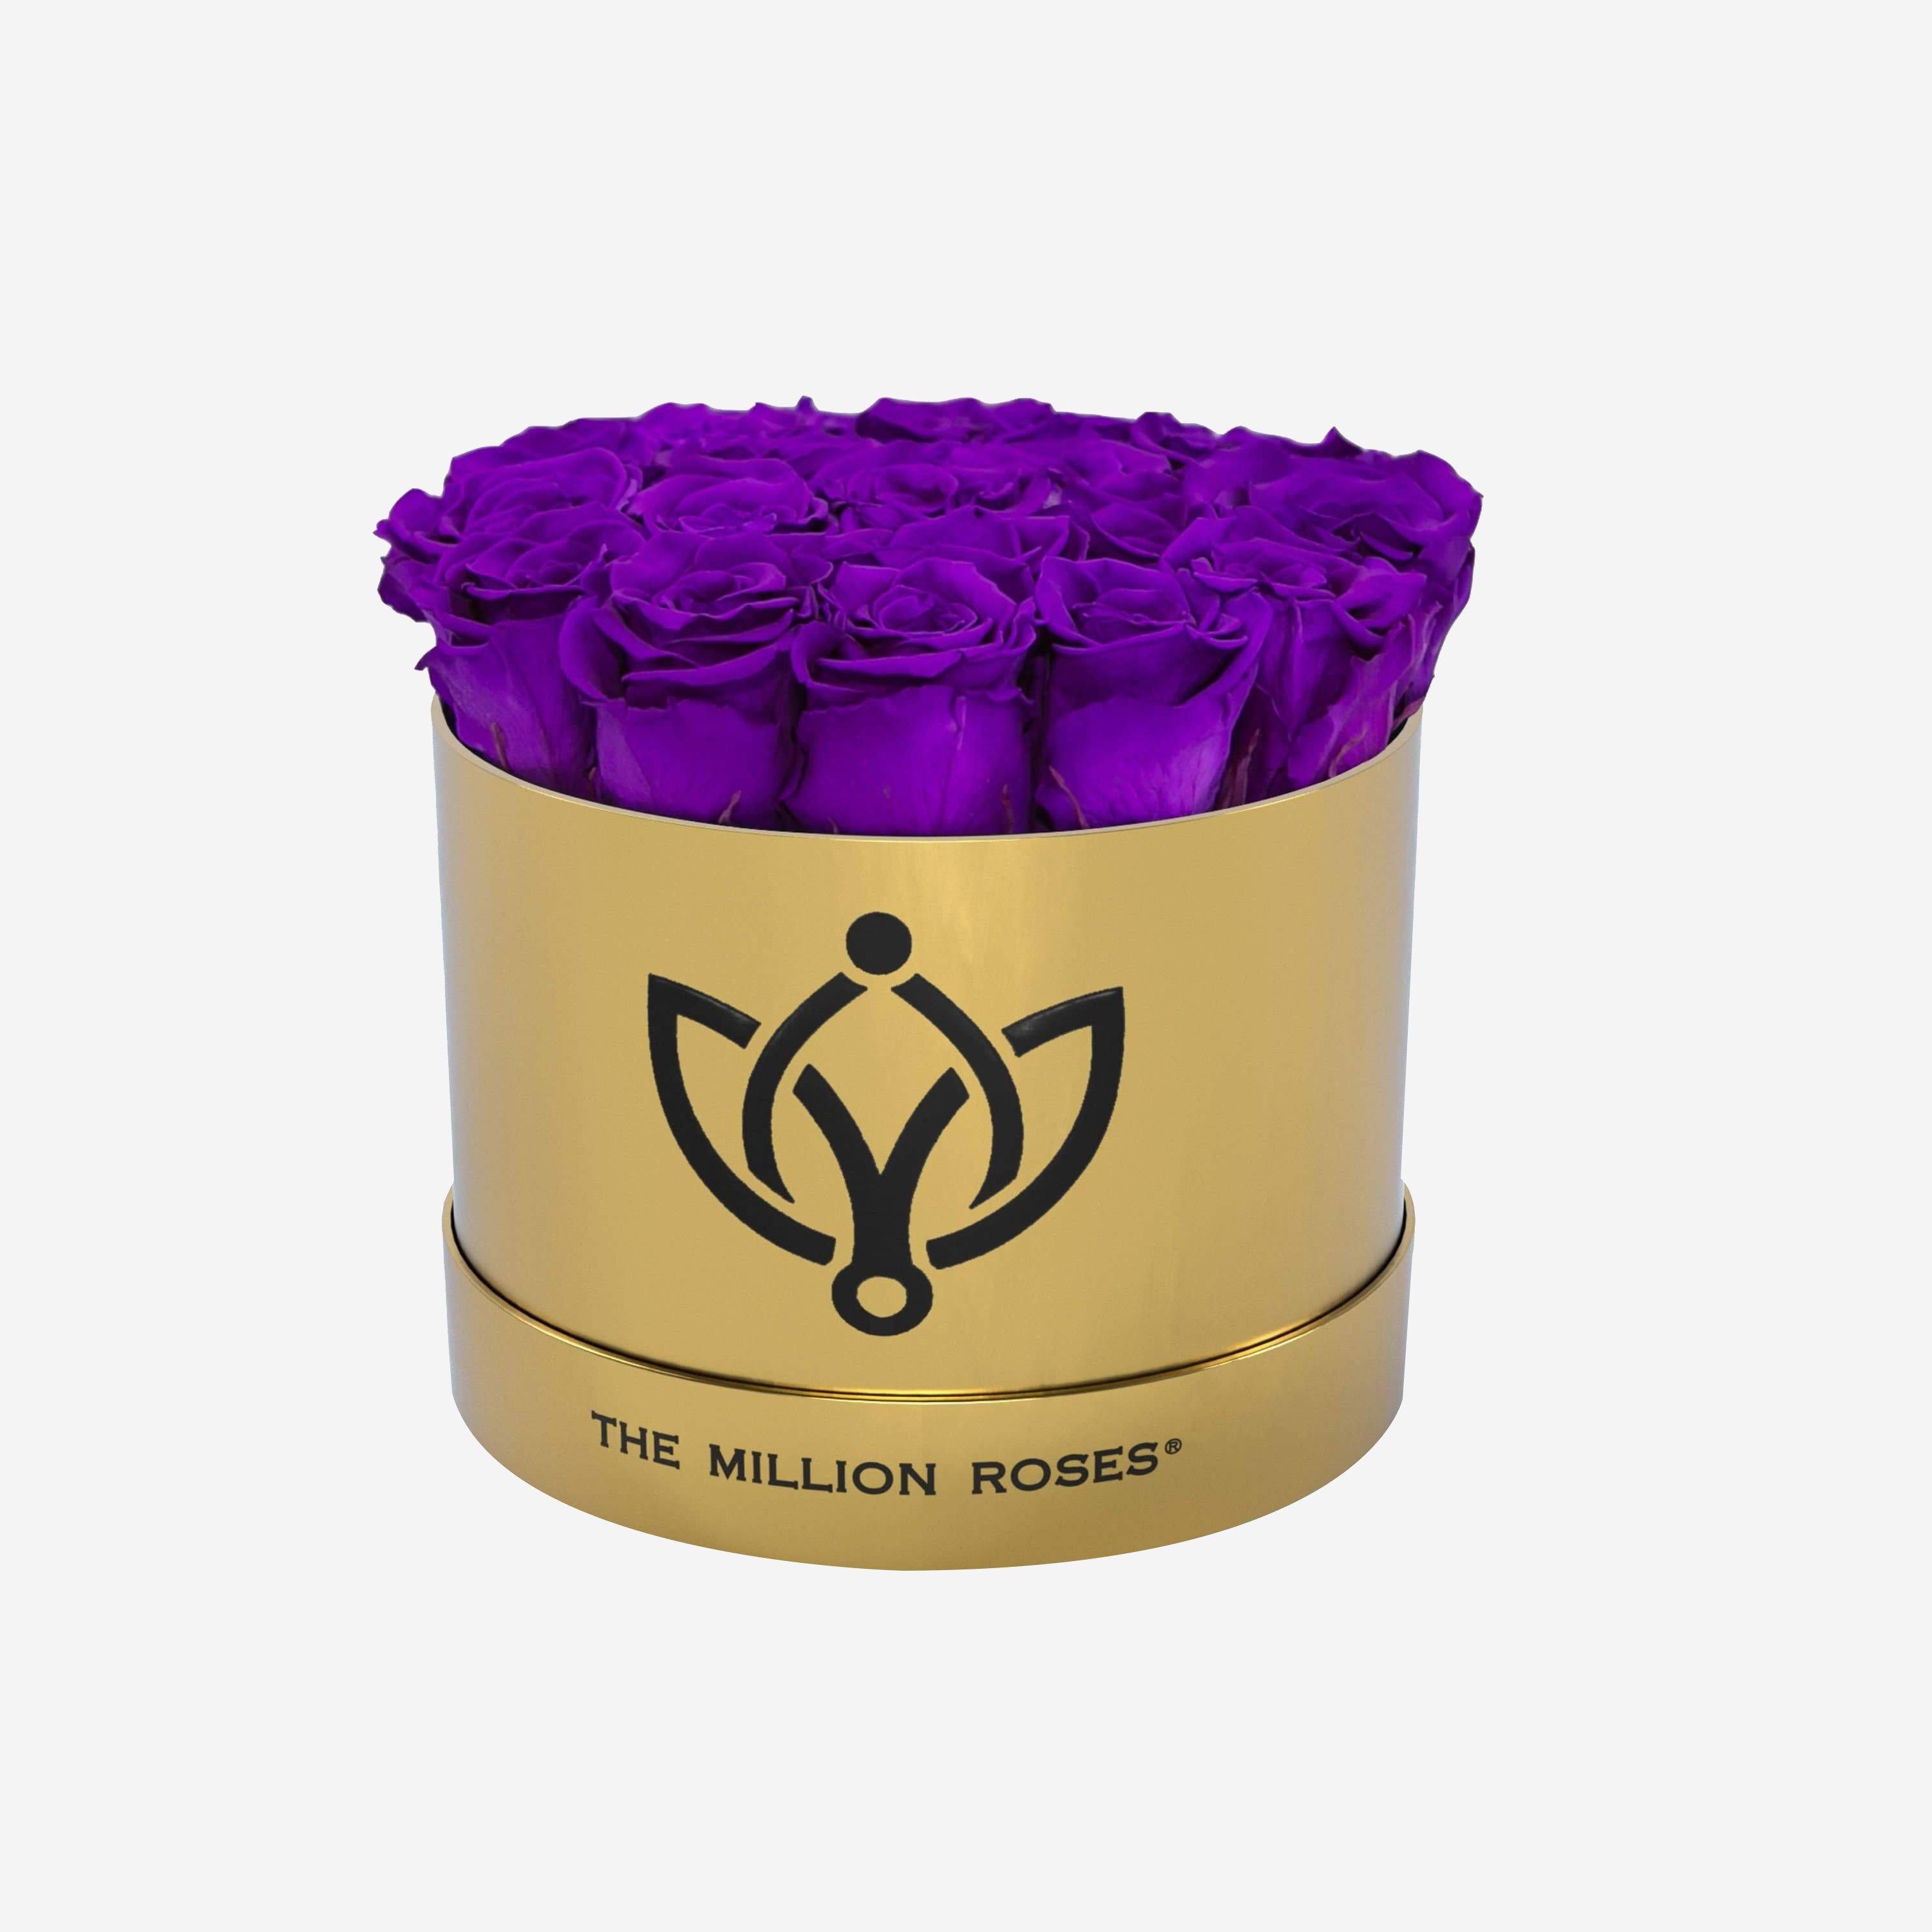 Classic Mirror Gold Box | Bright Purple Roses - The Million Roses